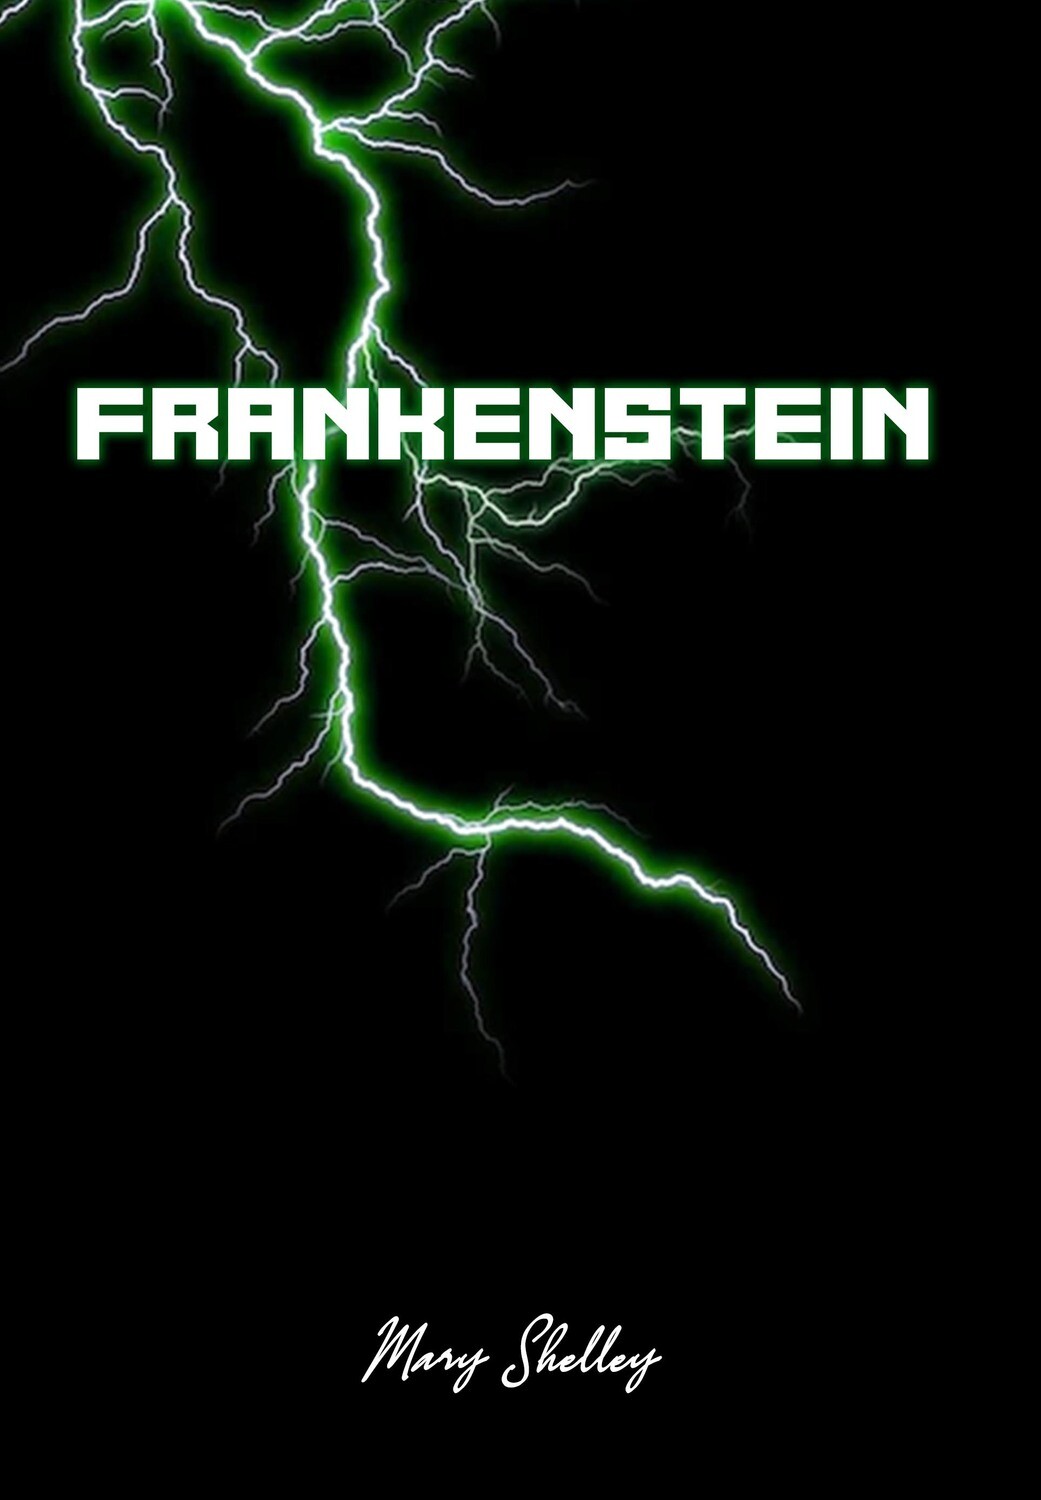 Frankenstein by Mary Shelley - Digital Book [INSTANT DIGITAL DOWNLOAD]